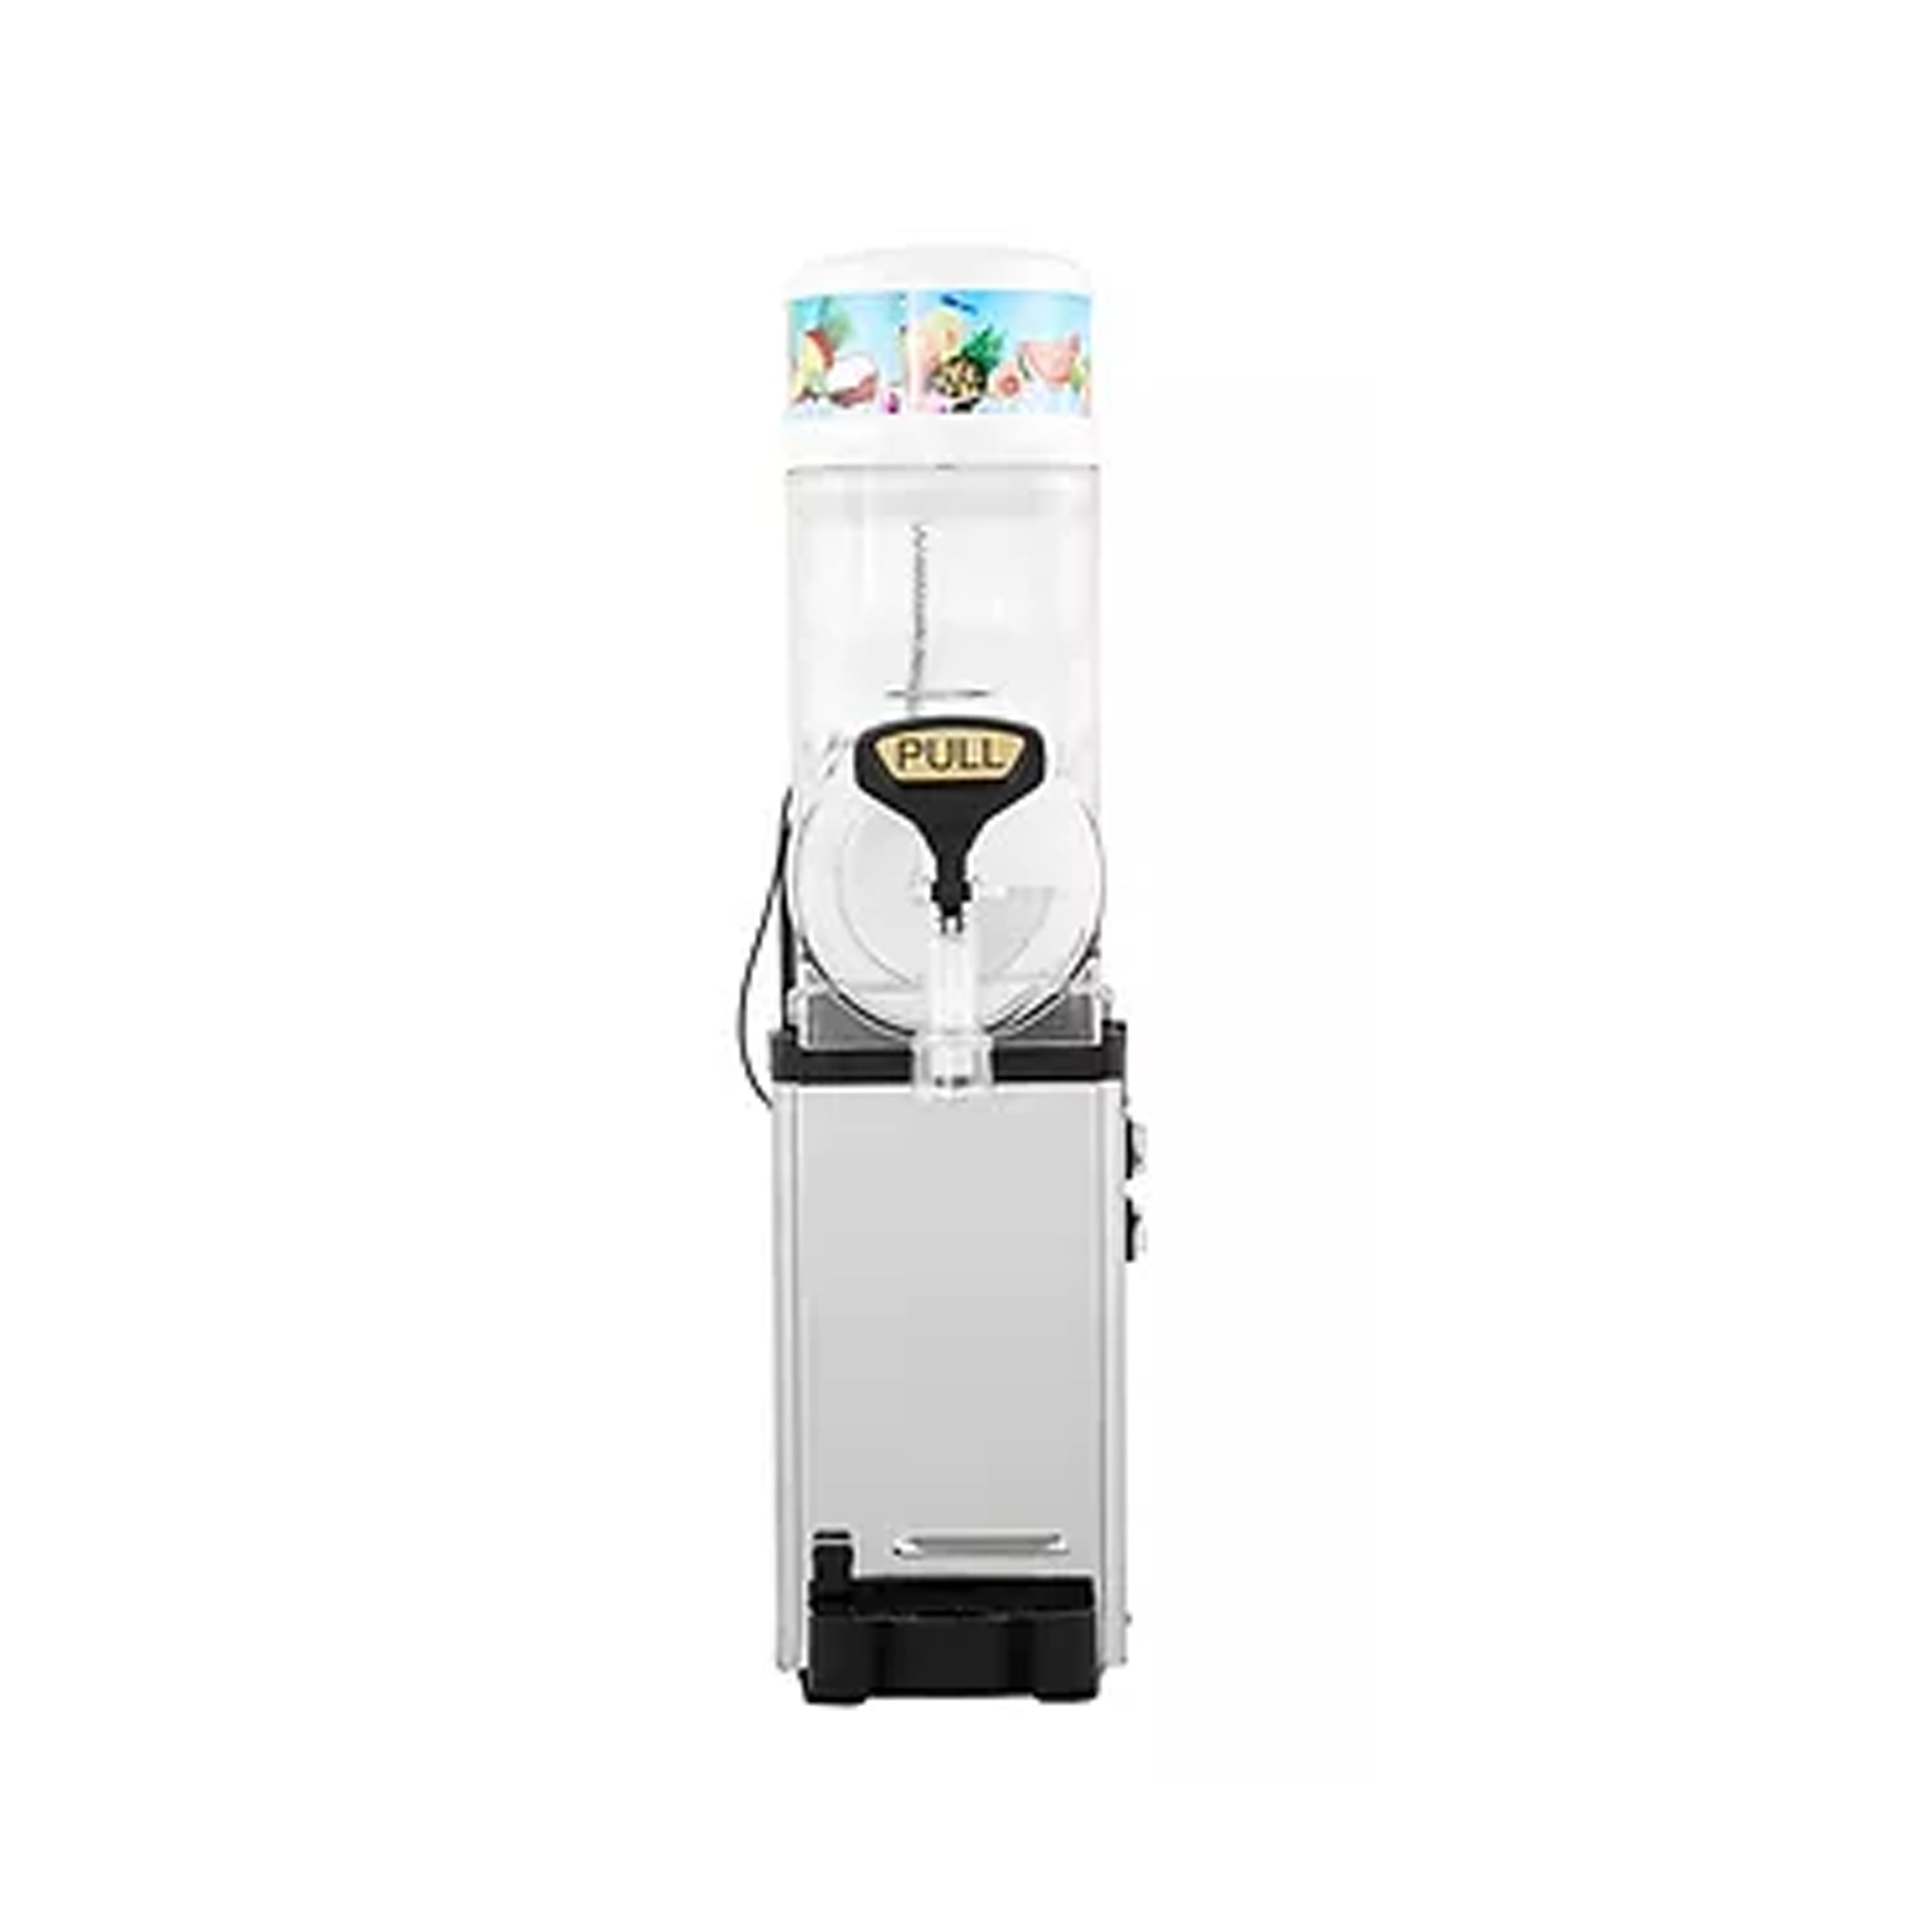 Icetro - SSM-180, Commercial Single 3.2 Gallon Granita Slushy Frozen Margarita Beverage Machine